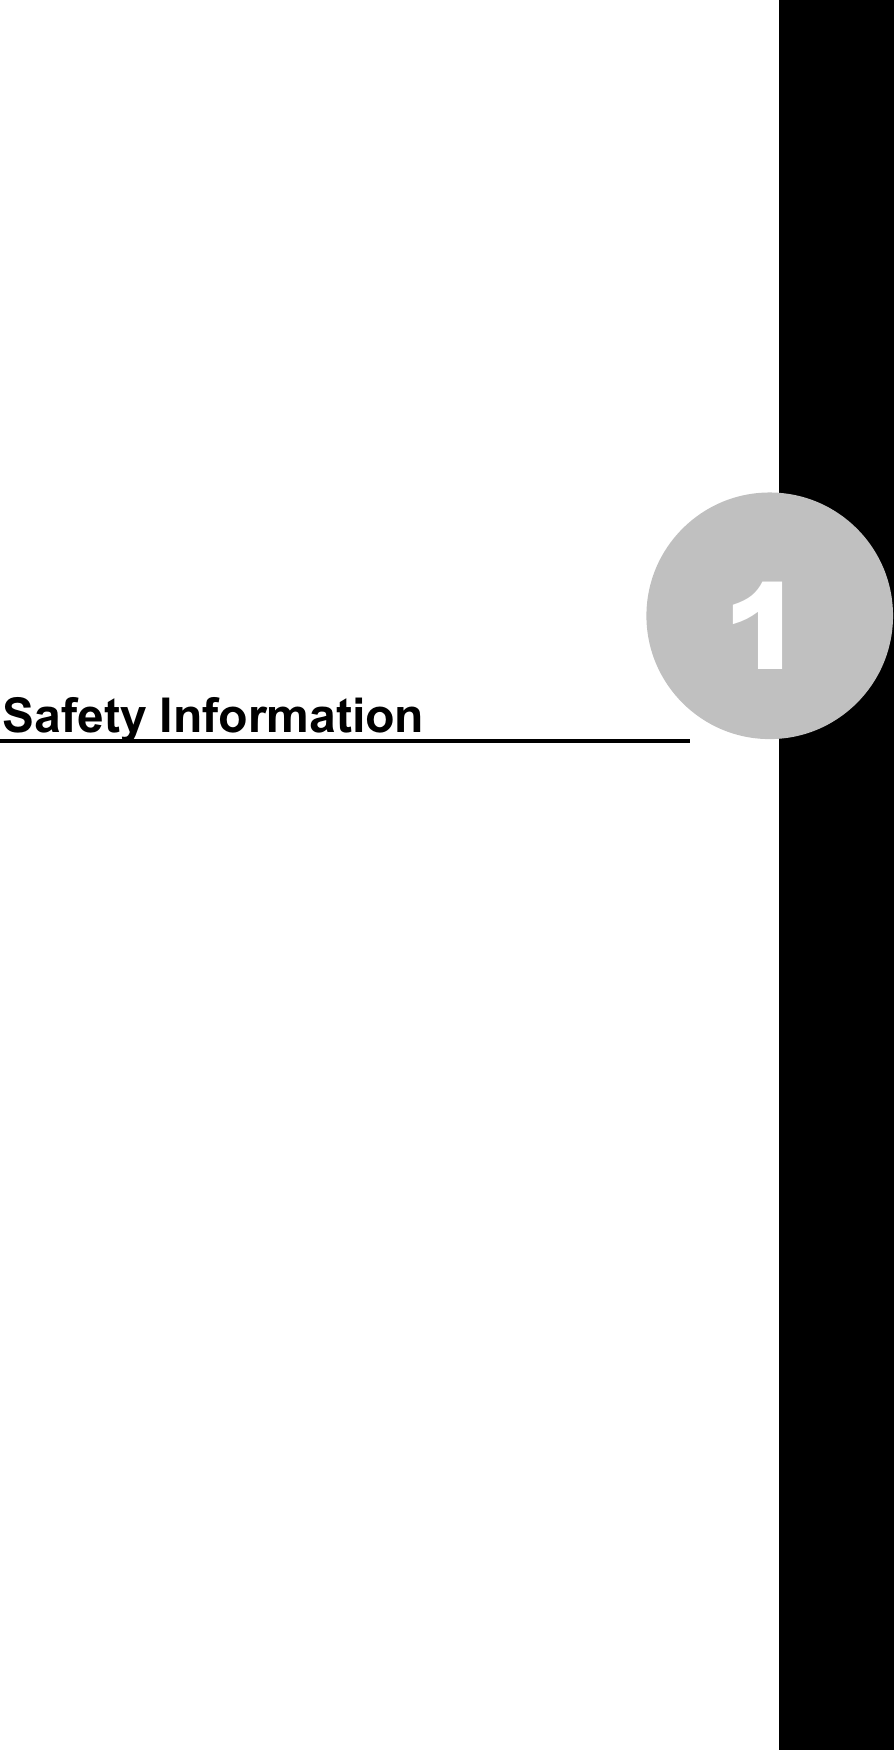   1           Safety Information  